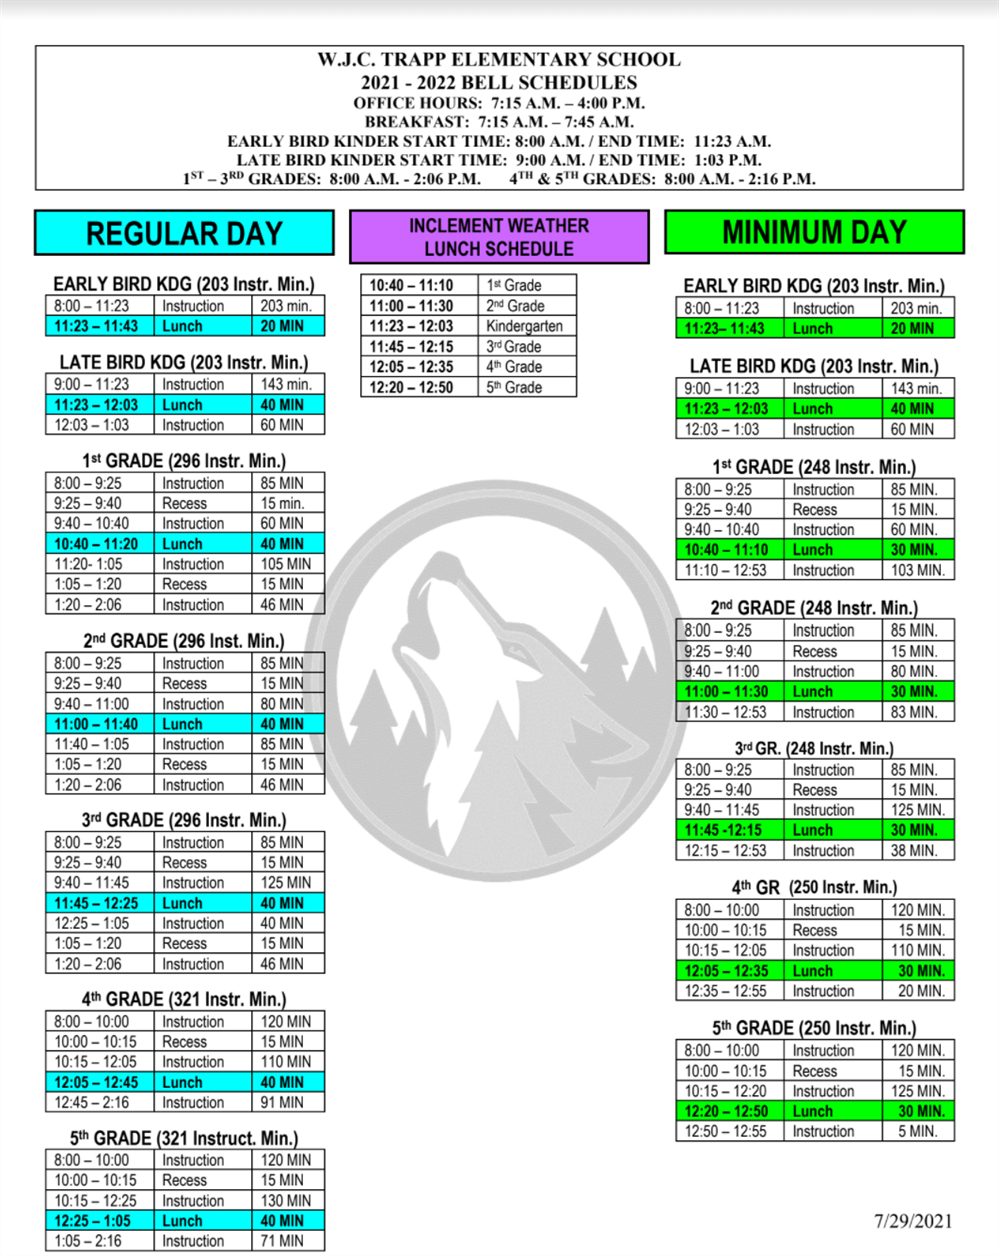  bell schedule